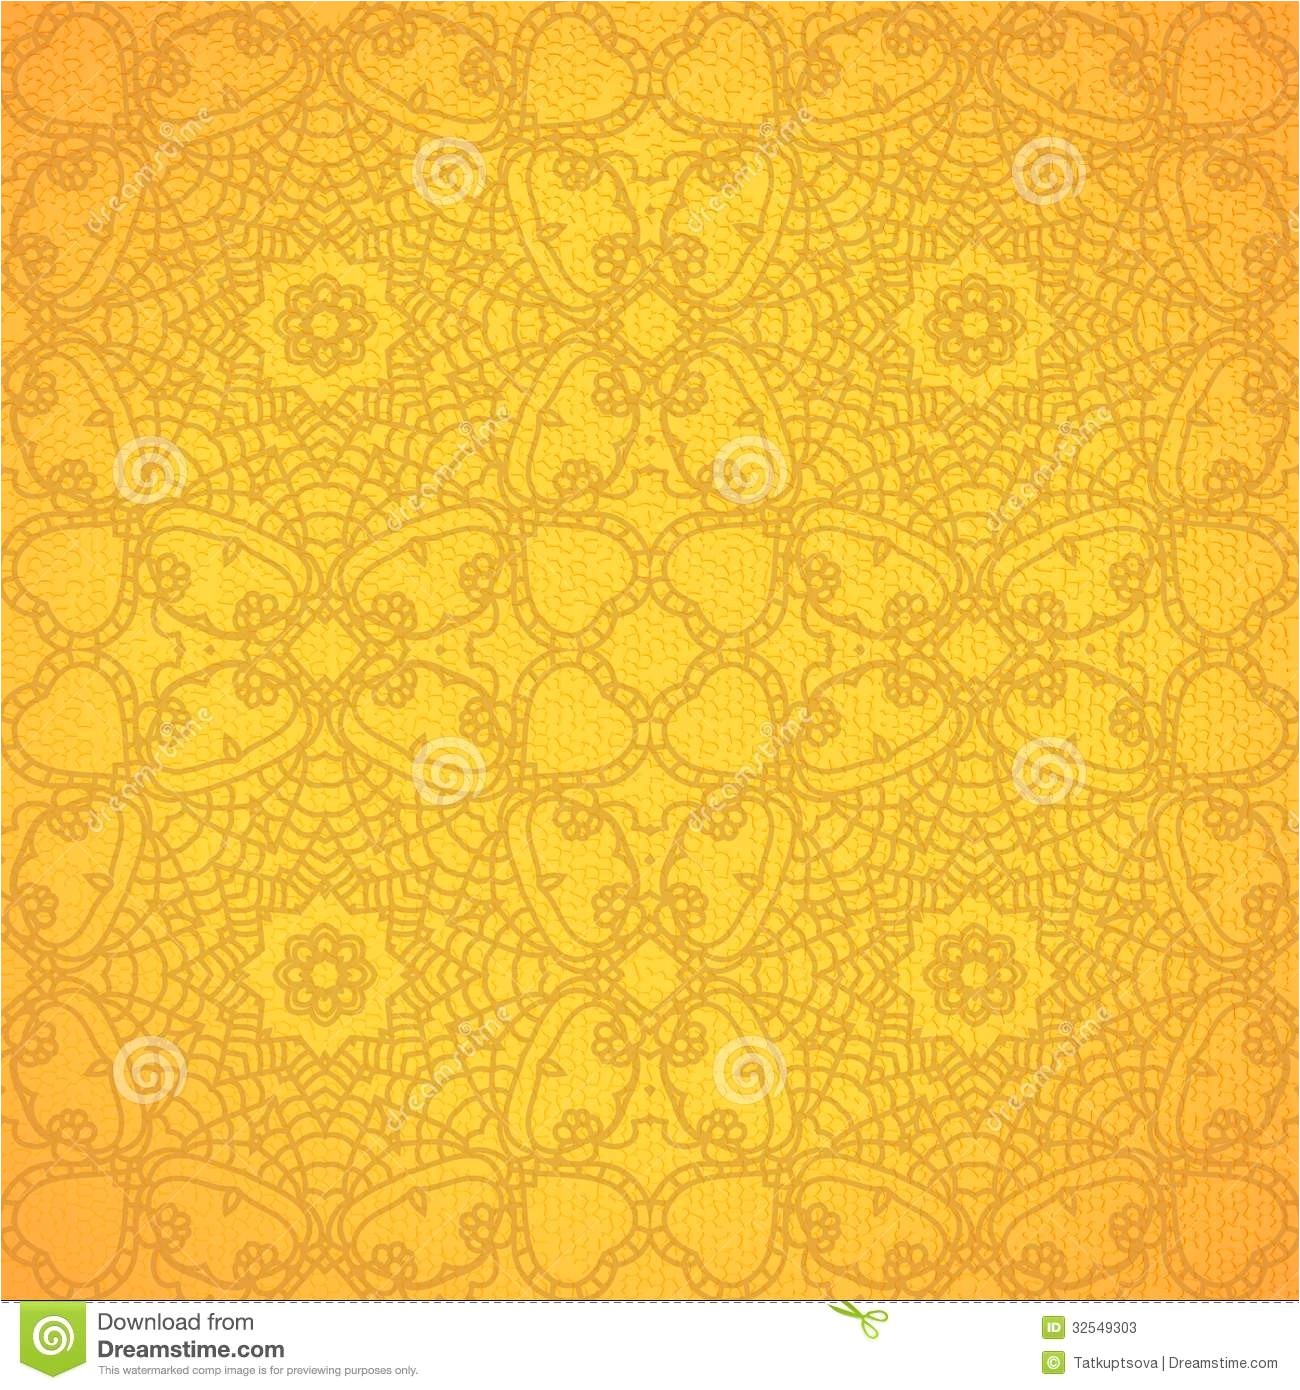 indian wedding invitation background designs free download